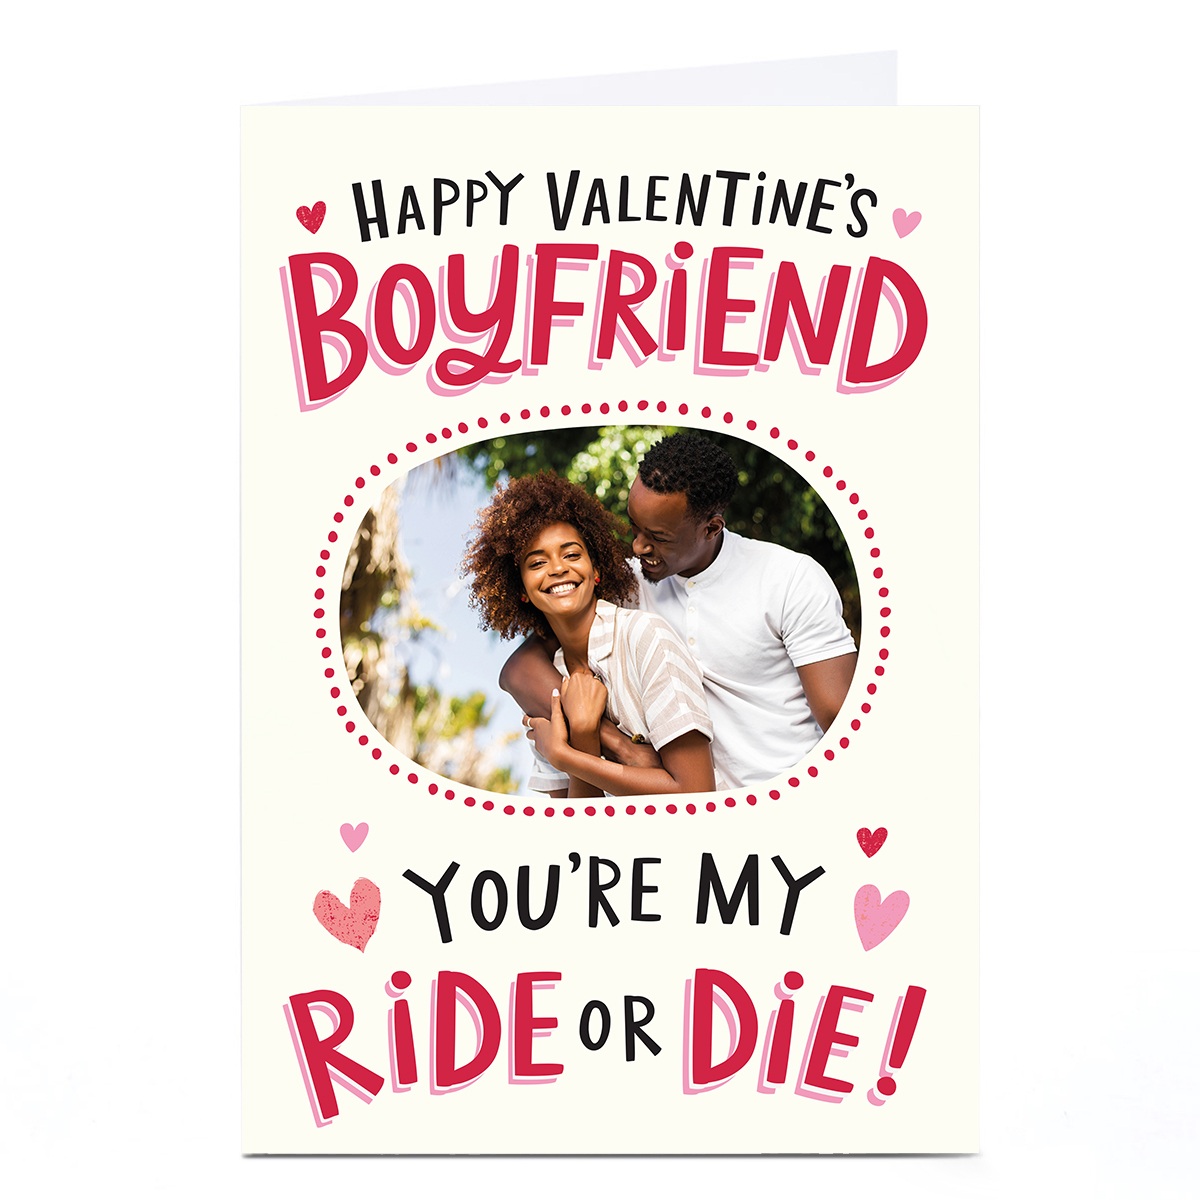 Photo Ebony Newton Valentine's Day Card - Boyfriend Ride or Die!